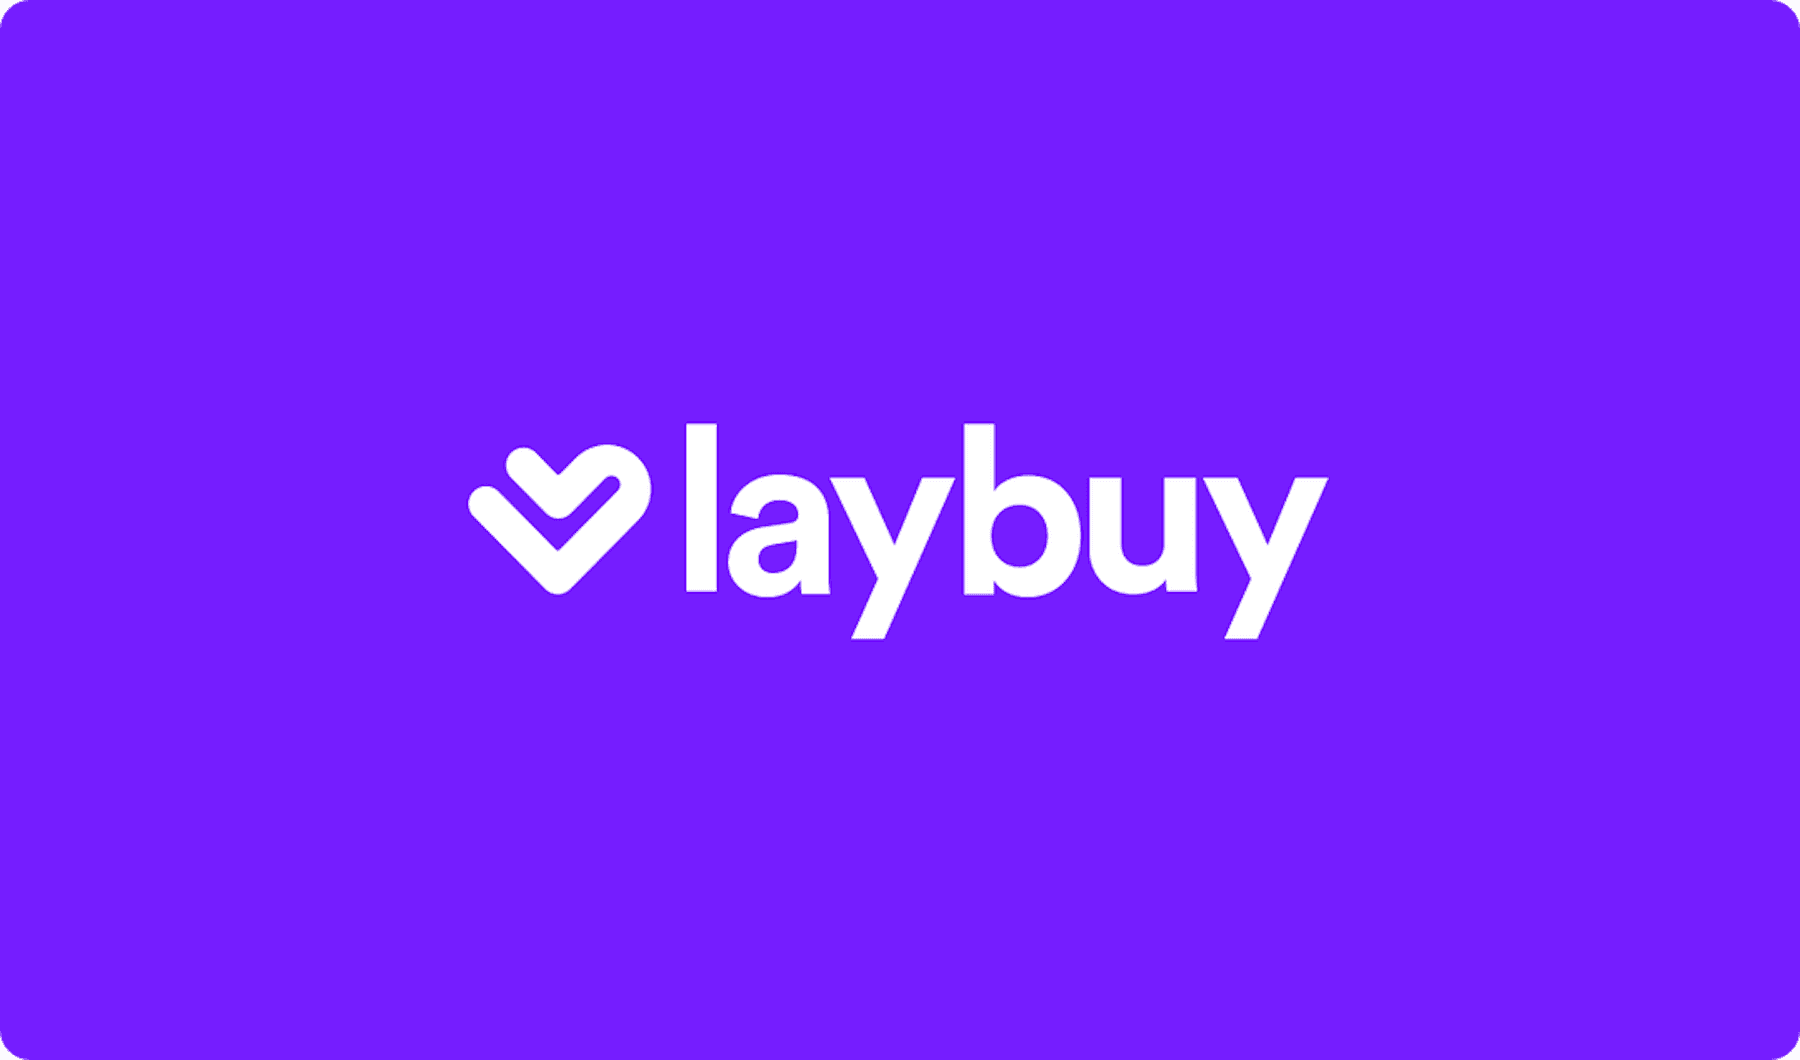 laybuy_logo1800x1000